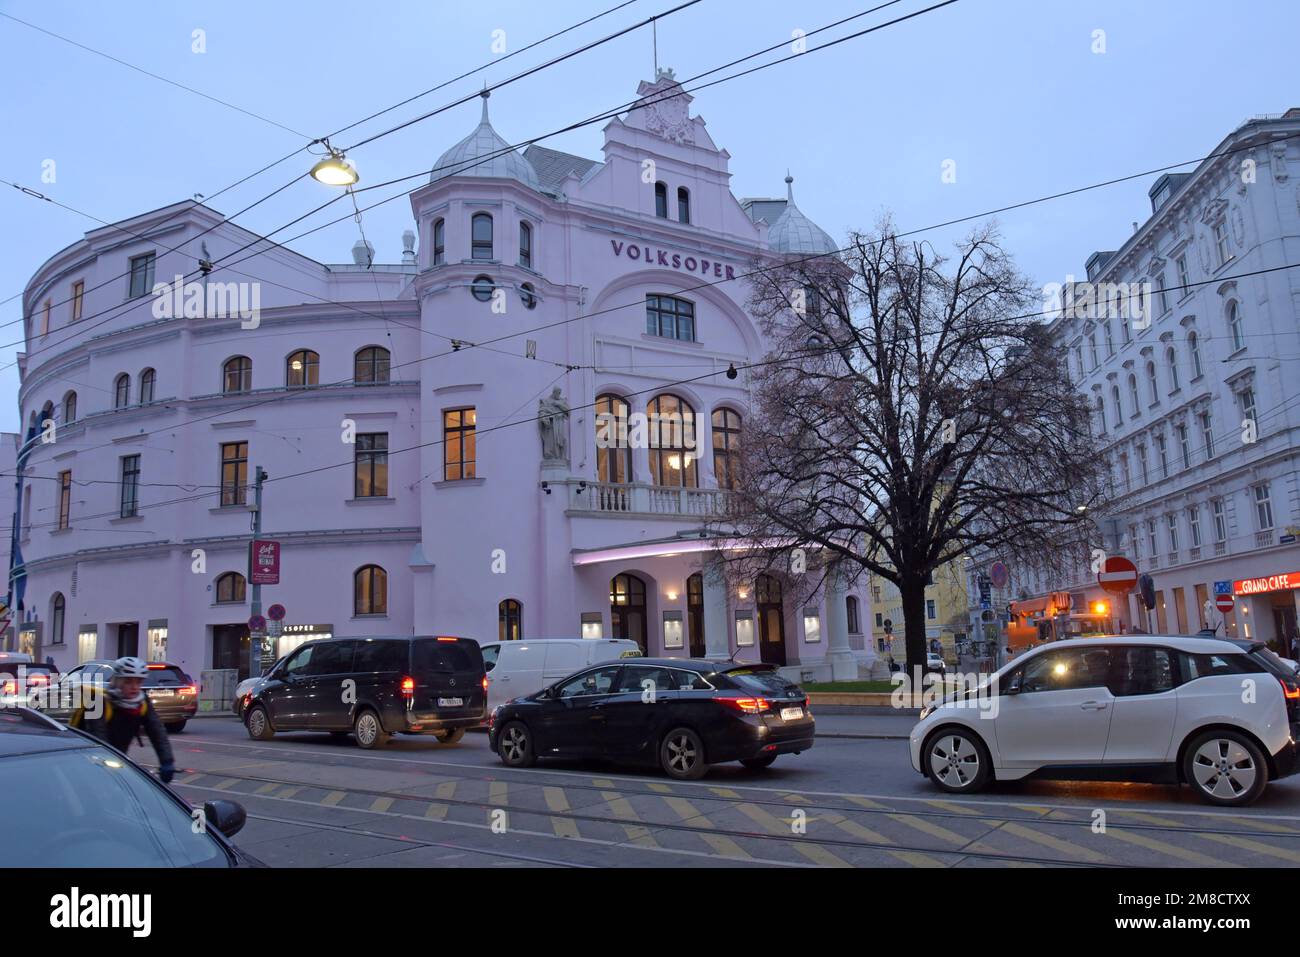 The Volksoper, Währinger Str, Vienna, Austria, 1898 built theatre & opera house. Location for James Bond 007 film The Living Daylights Stock Photo